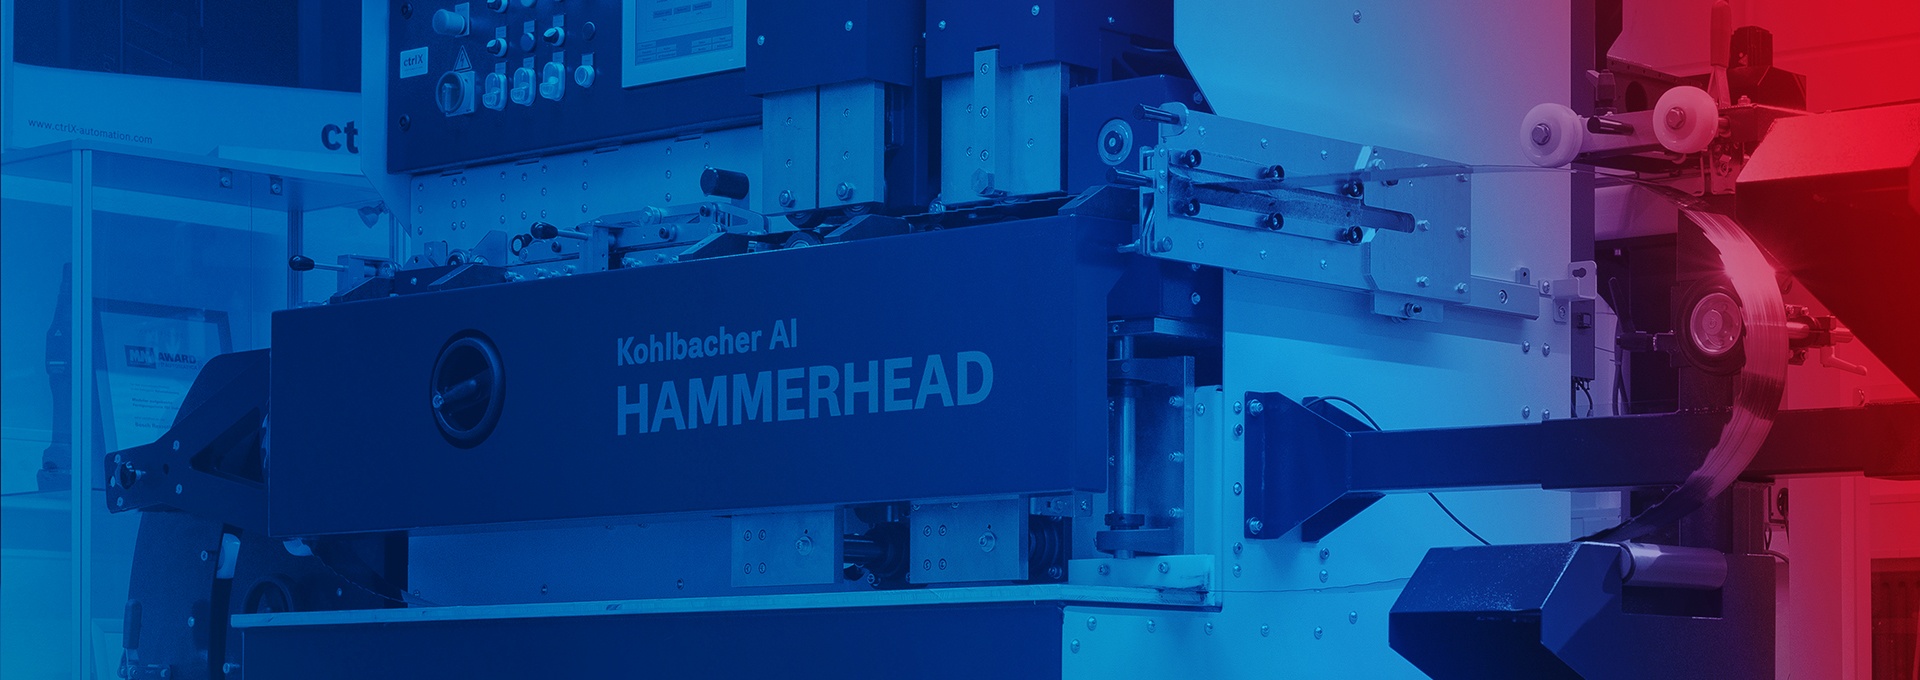 Kohlbacher, AI - Hammerhead saw blade sharpening machine equipped with ctrlX AUTOMATION Komponenent